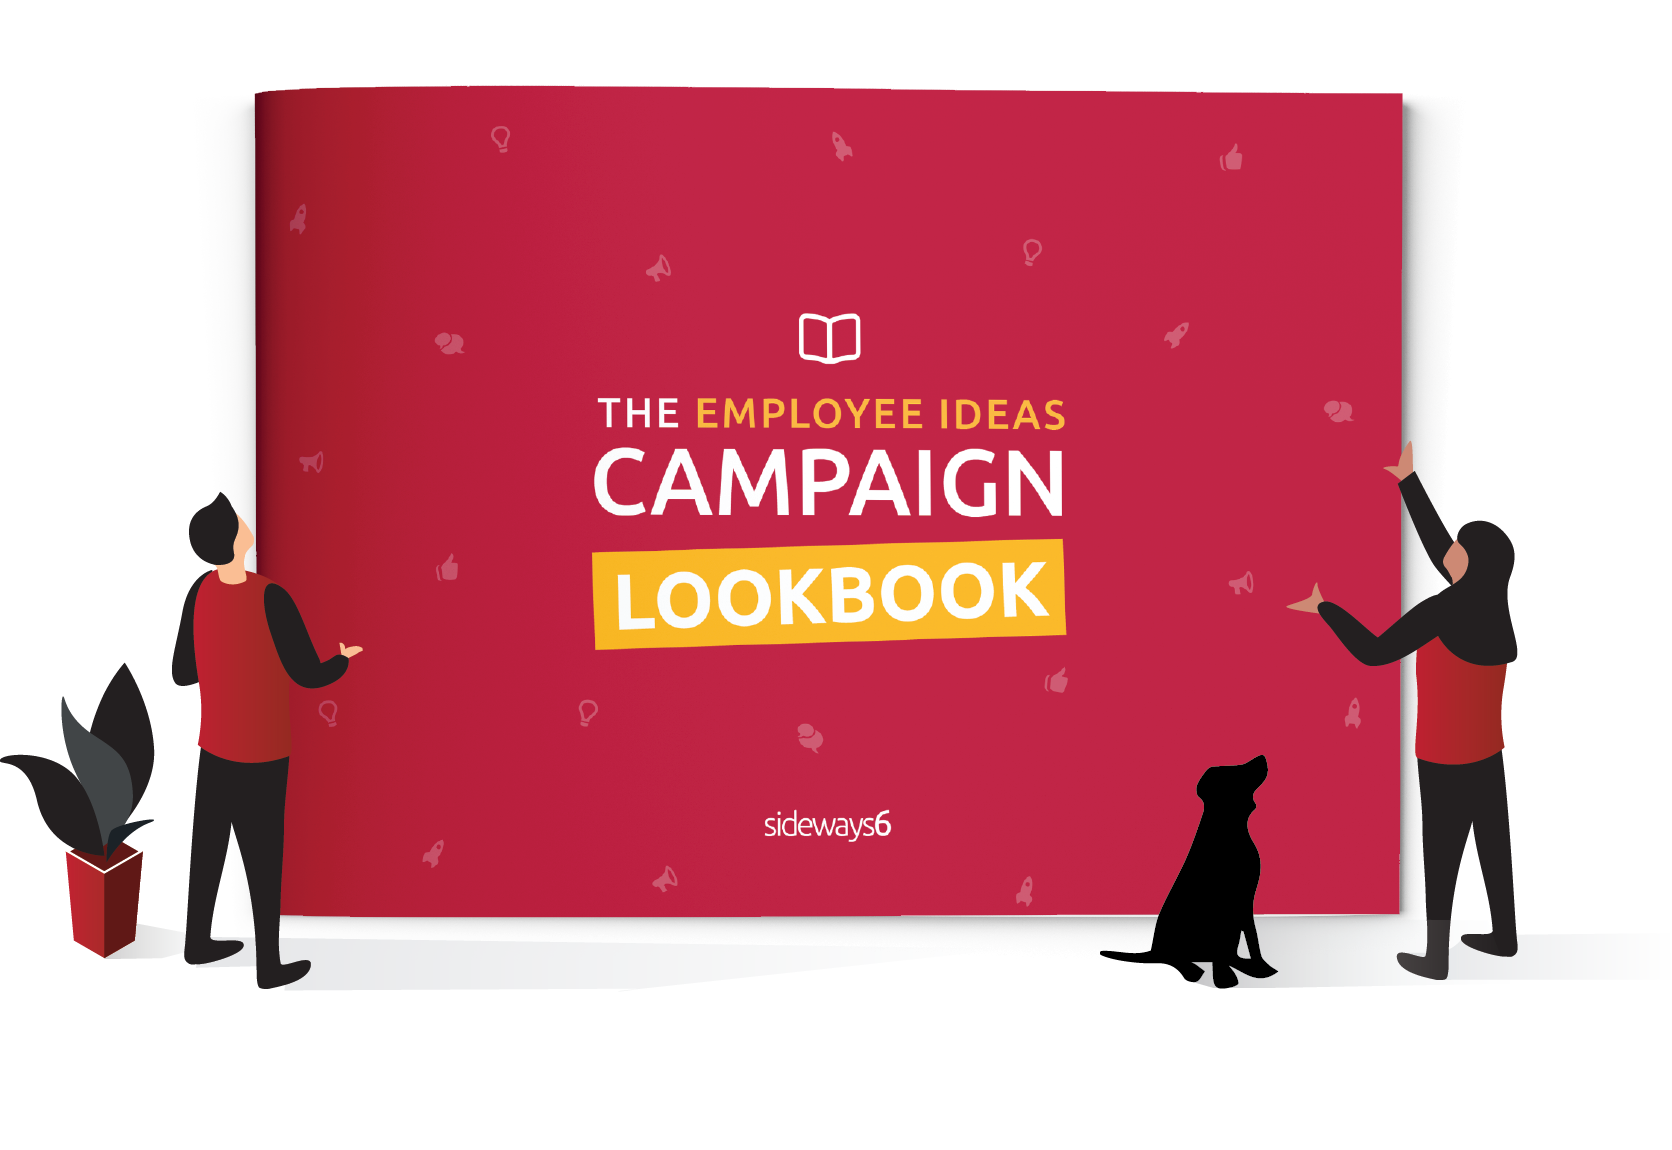 Campaign lookbook cover illustration